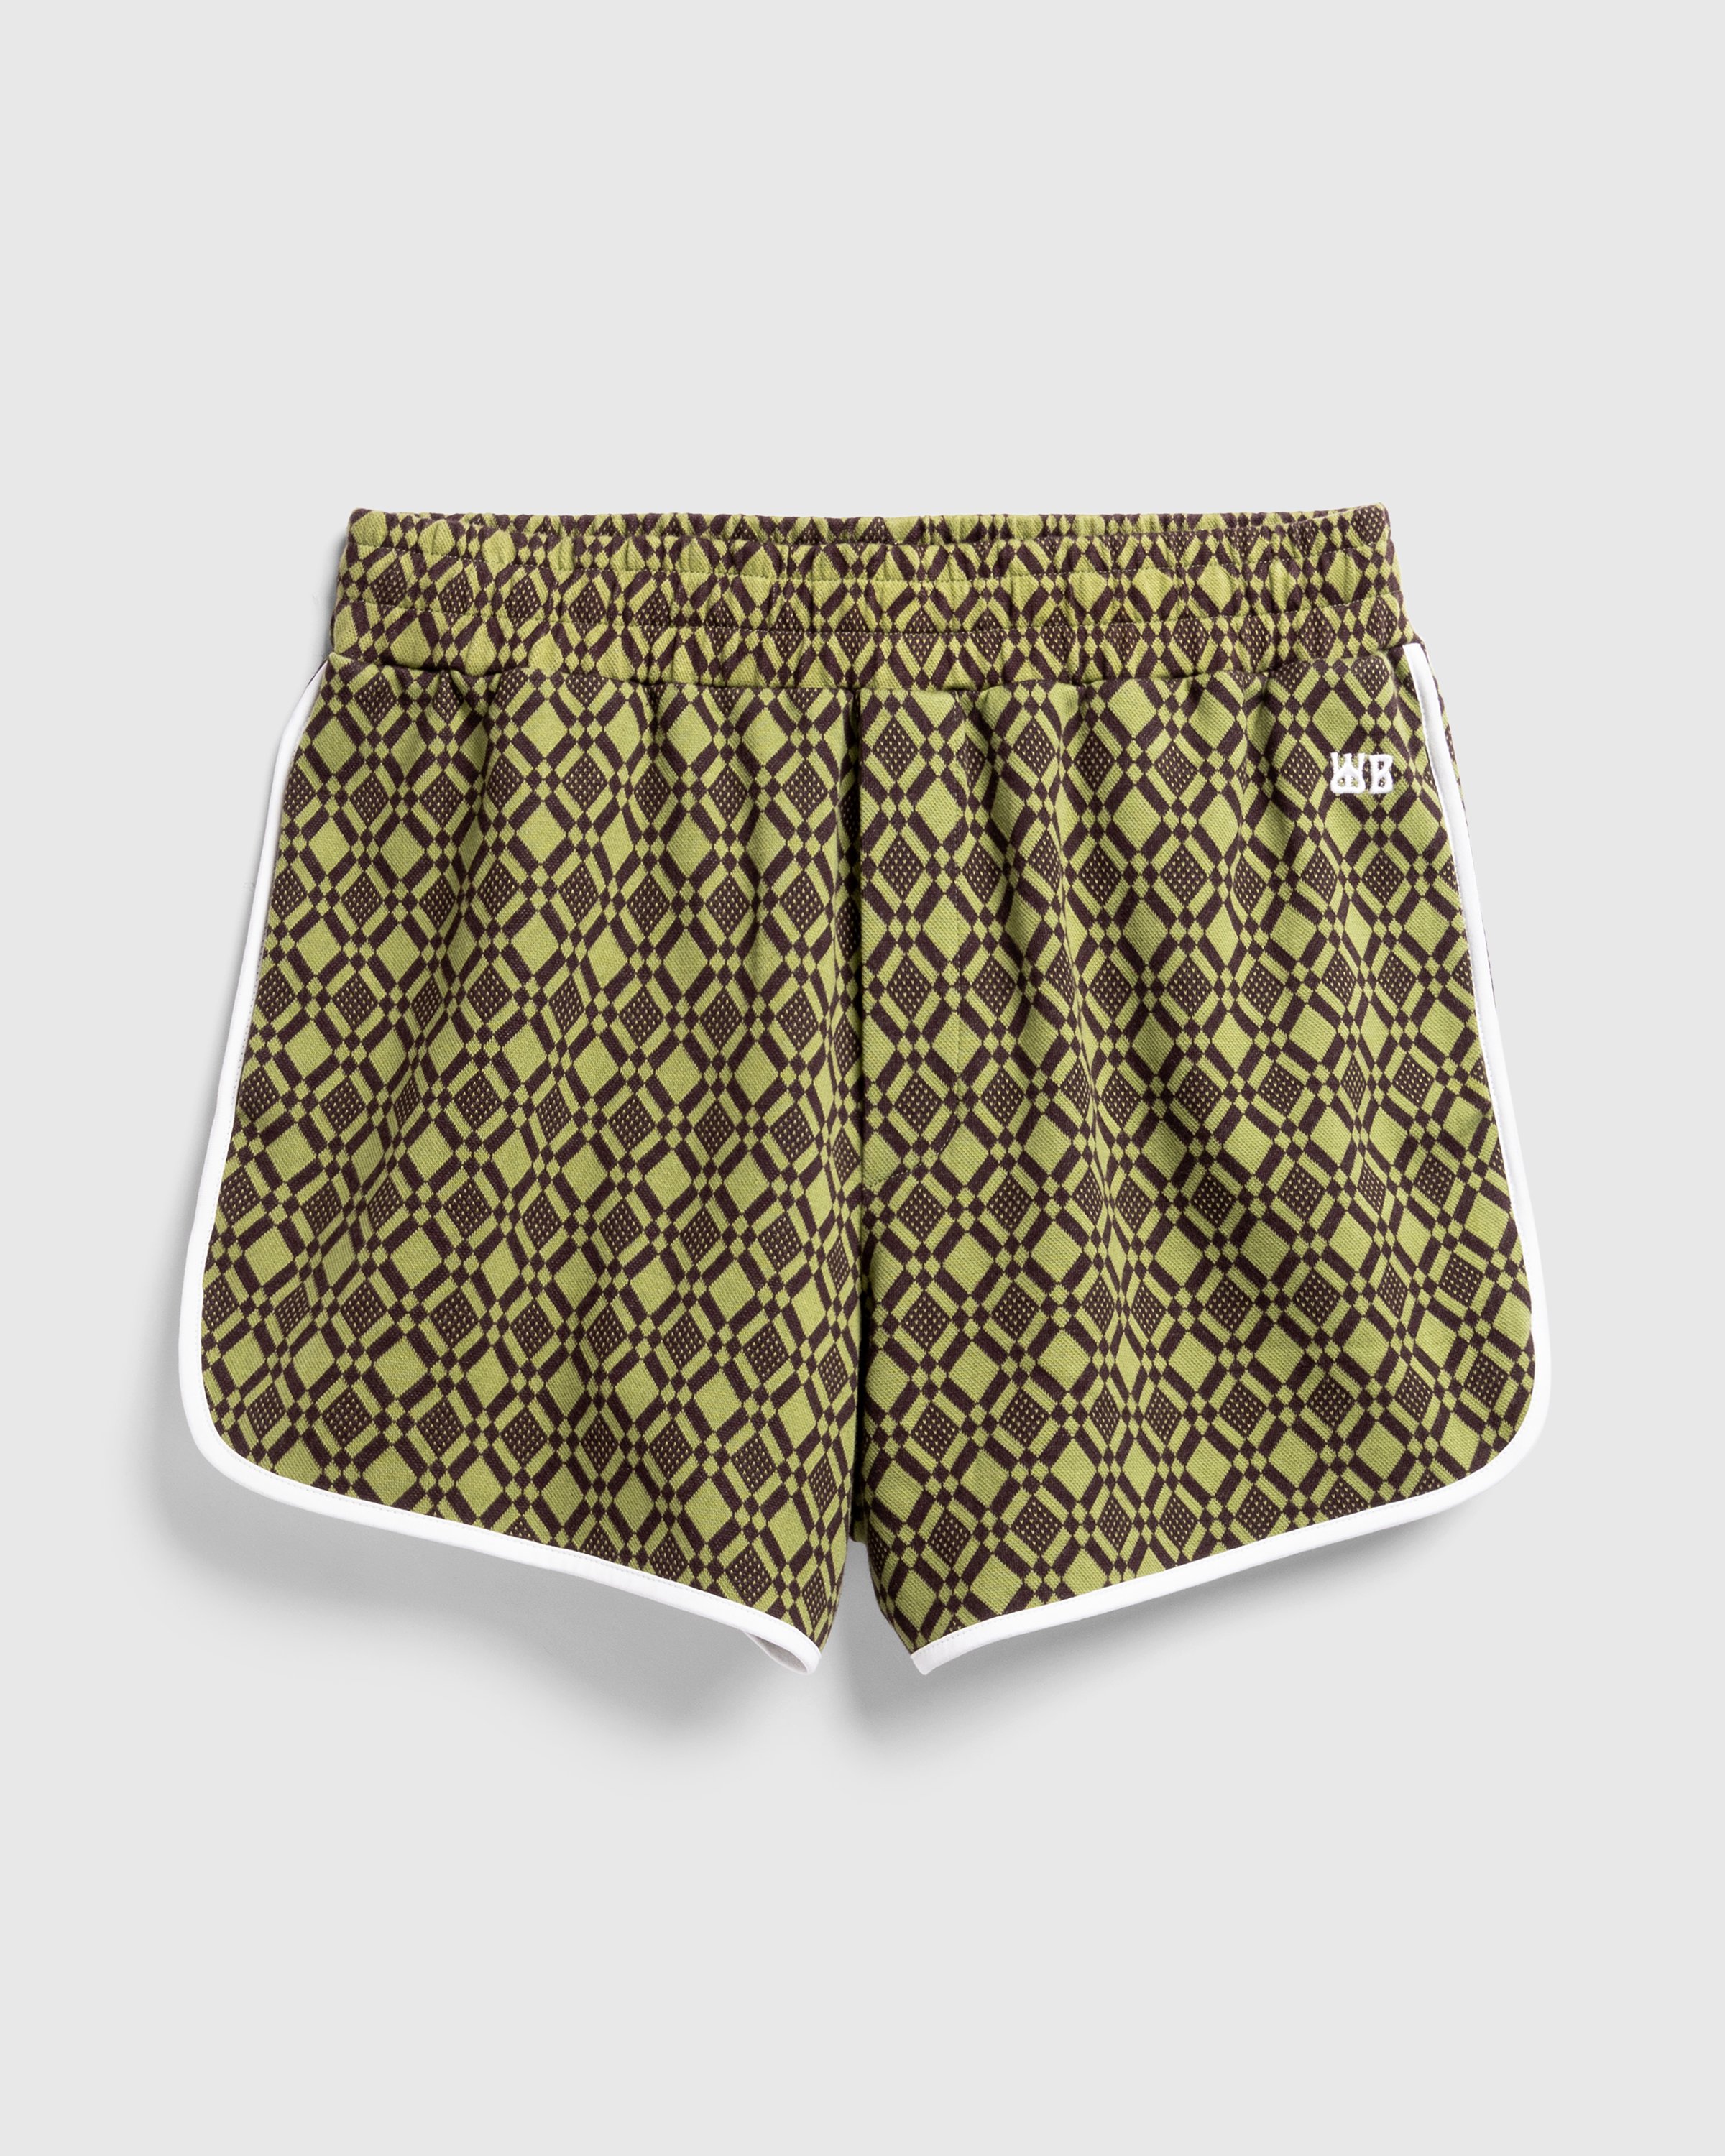 Wales Bonner - Jacquard Olive And Dark Brown Shorts - Clothing - Green - Image 1